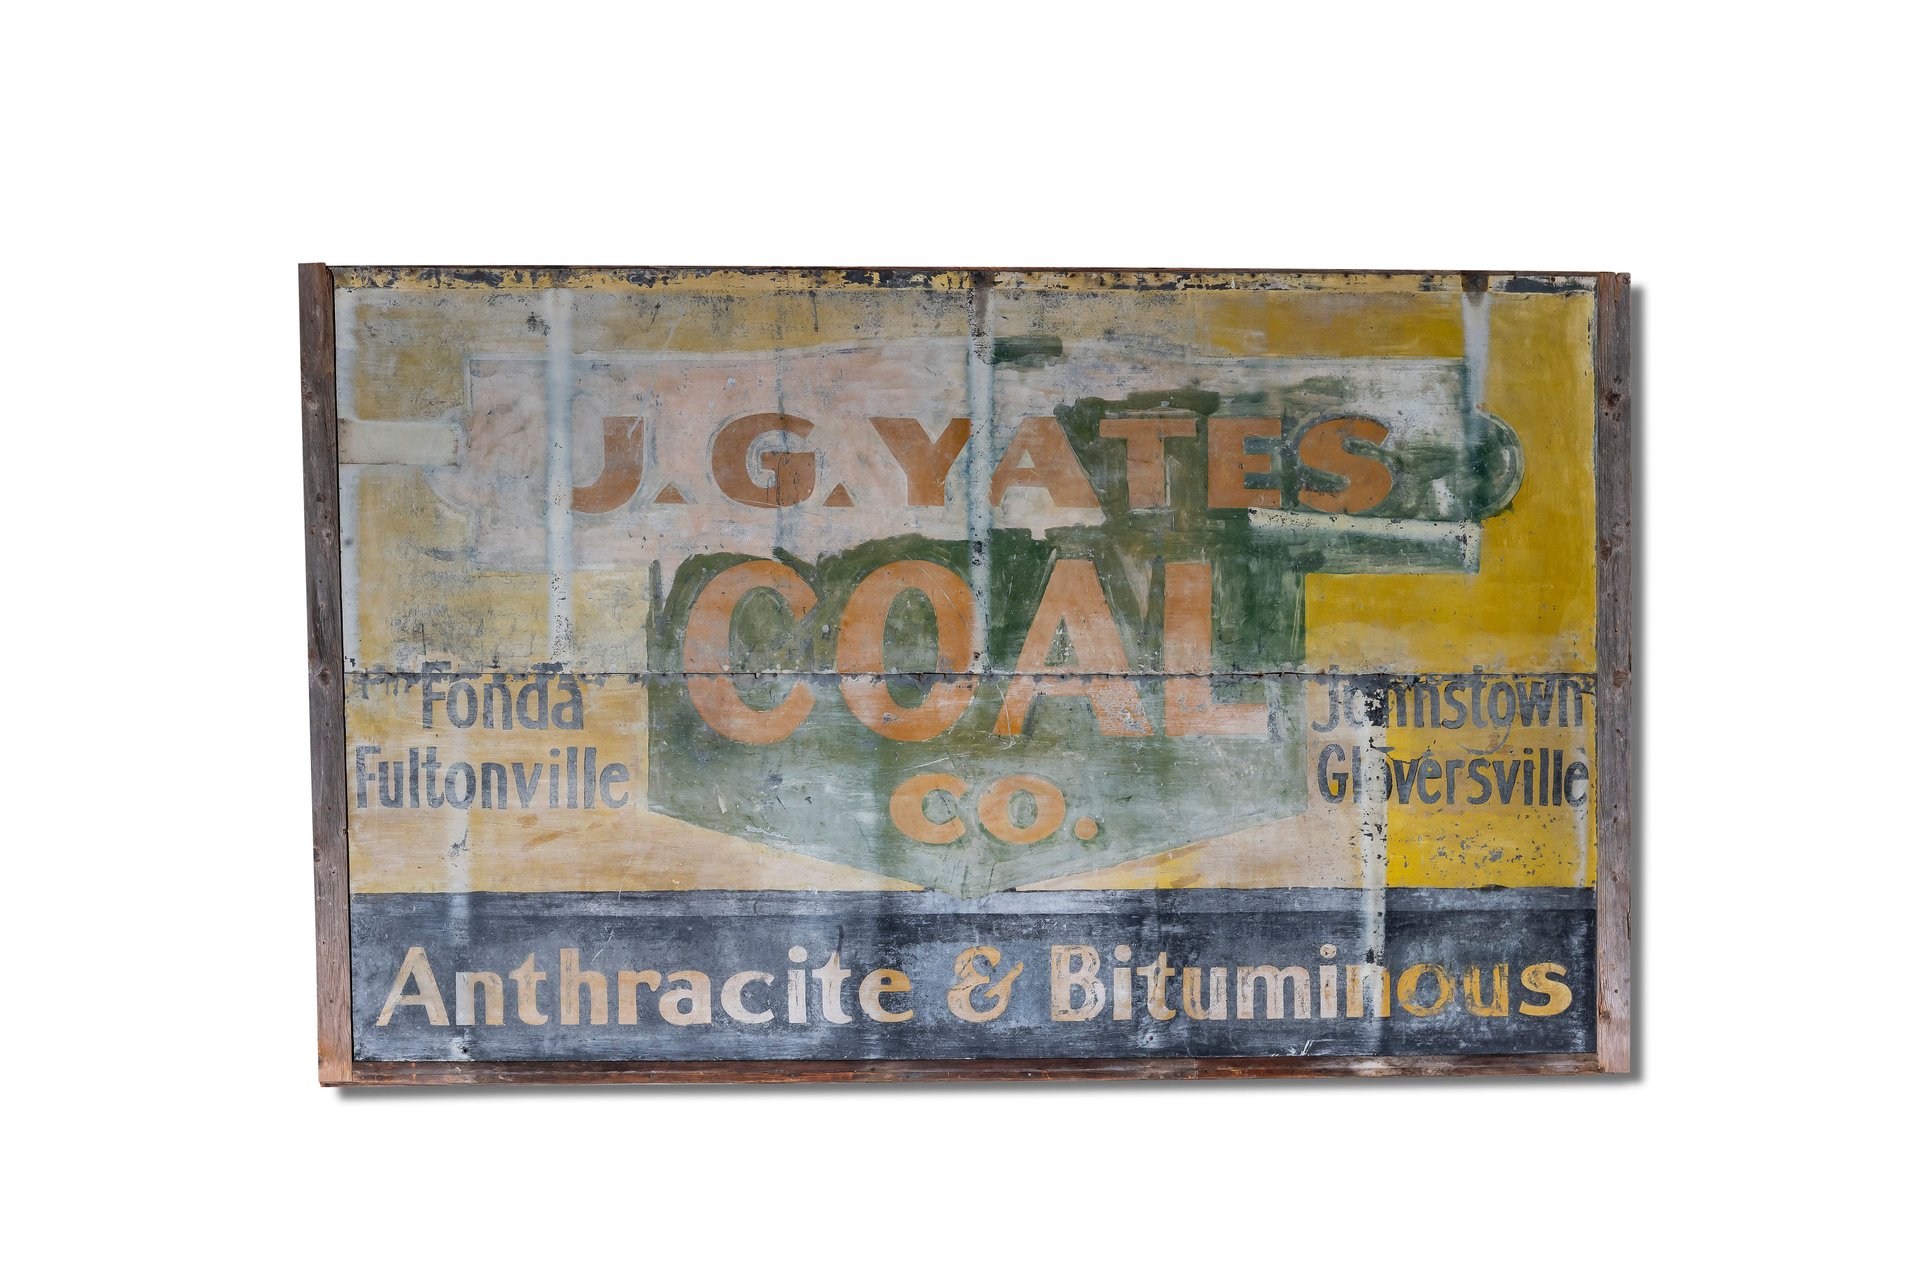 For Sale Large 'J.G. Yates Coal Co., Gloversville, NY' Sign